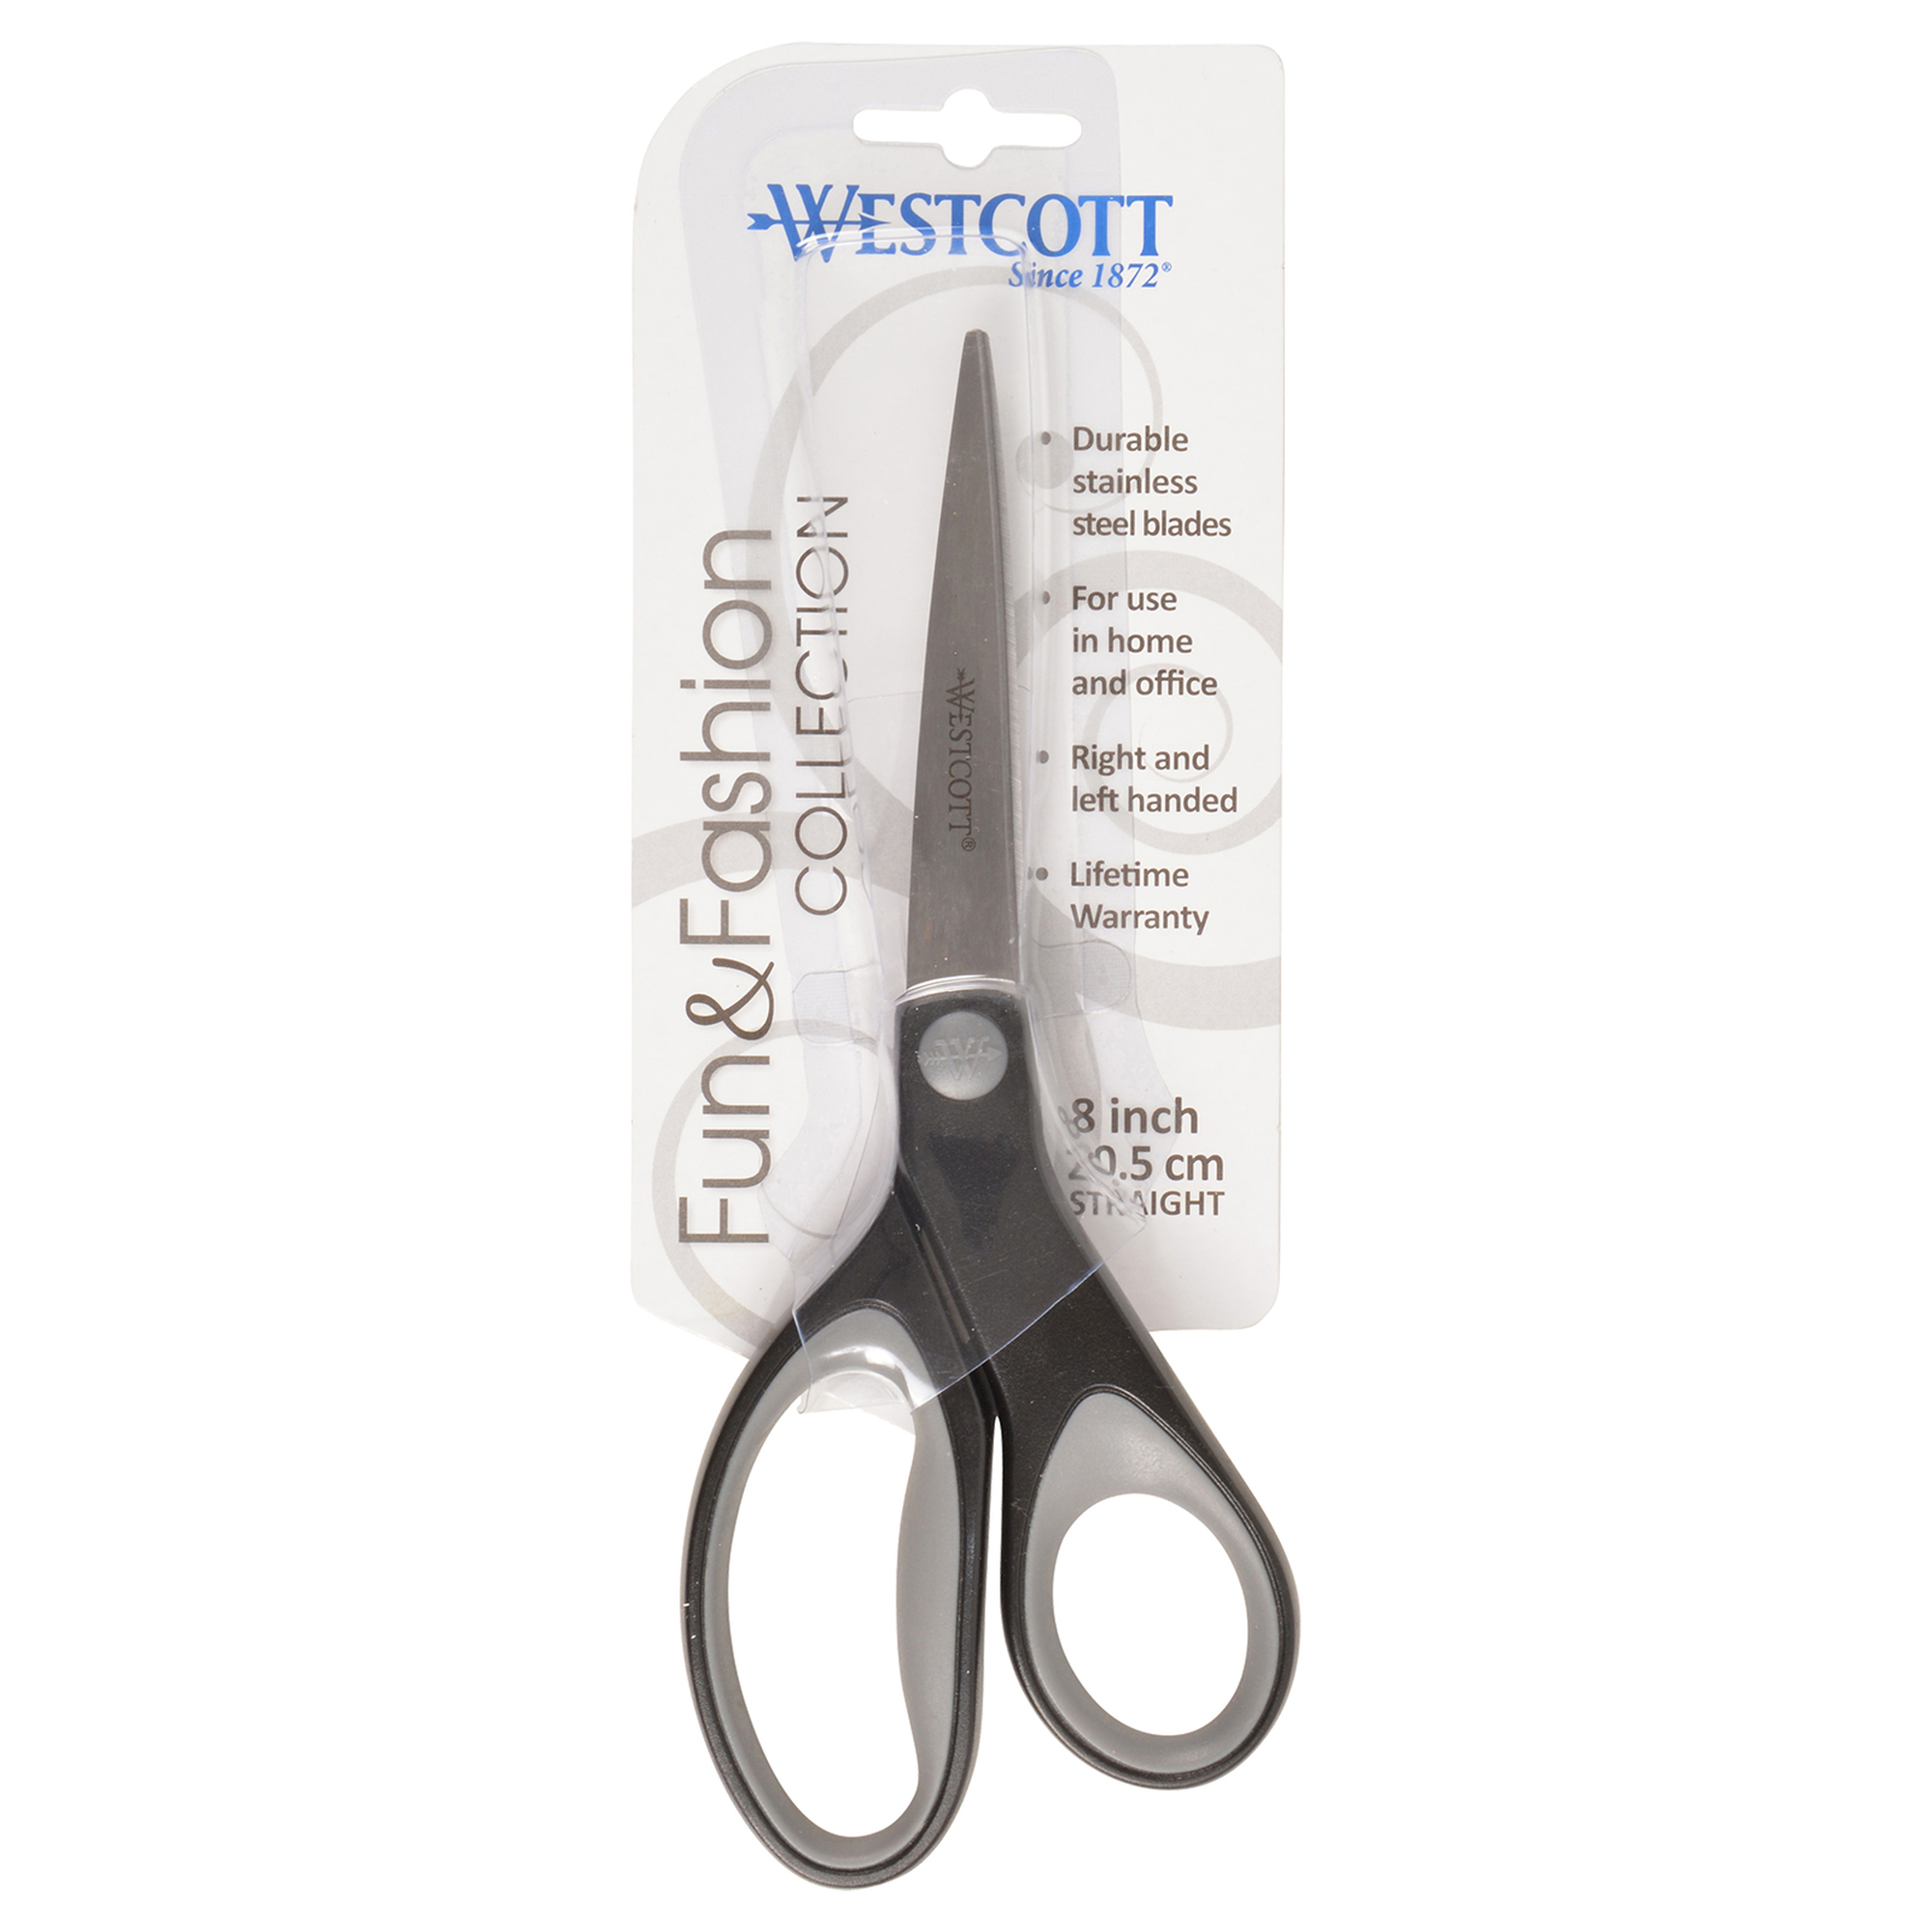 Westcott 8" Fun & Fashion Scissor (Gray and Black) - image 4 of 4